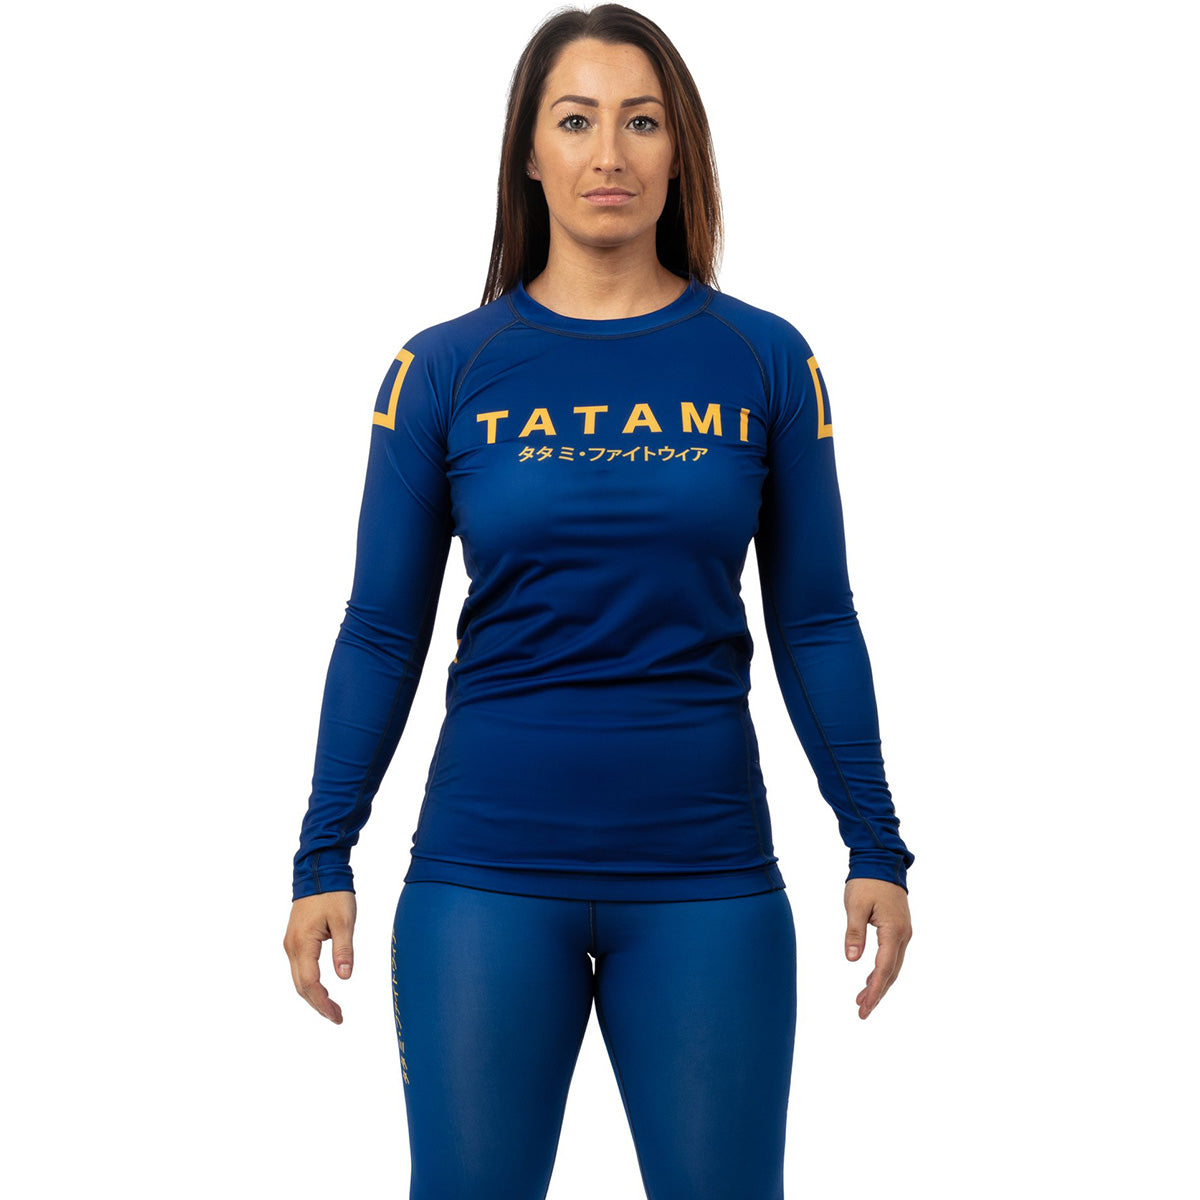 Tatami Fightwear Women's Katakana Long Sleeve Rashguard - Navy Tatami Fightwear